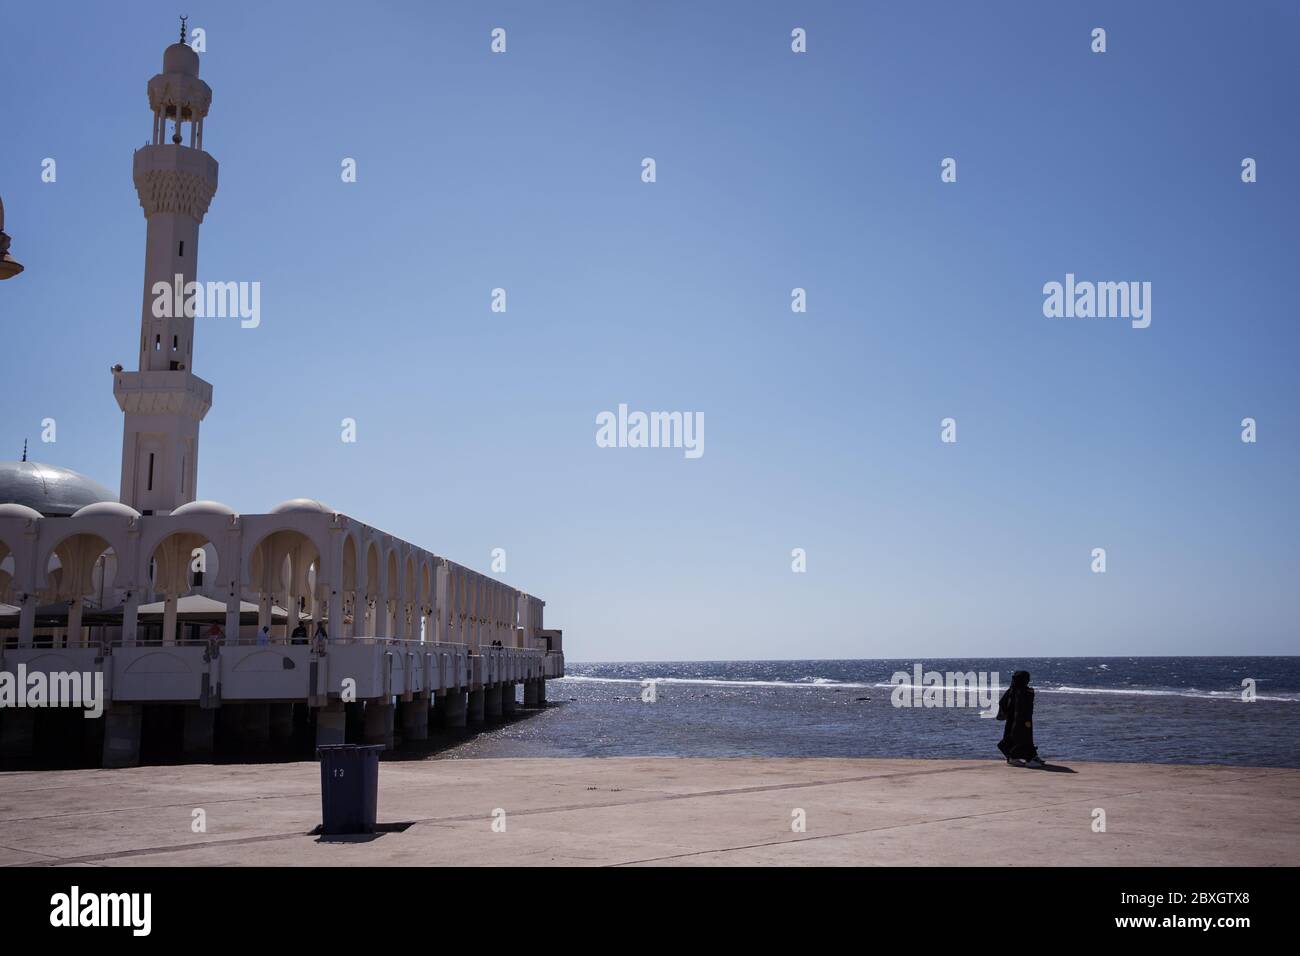 Jeddah / Saudi Arabia - January 20, 2020: Muslim woman with black abaya near beautiful Mosque near the sea Stock Photo